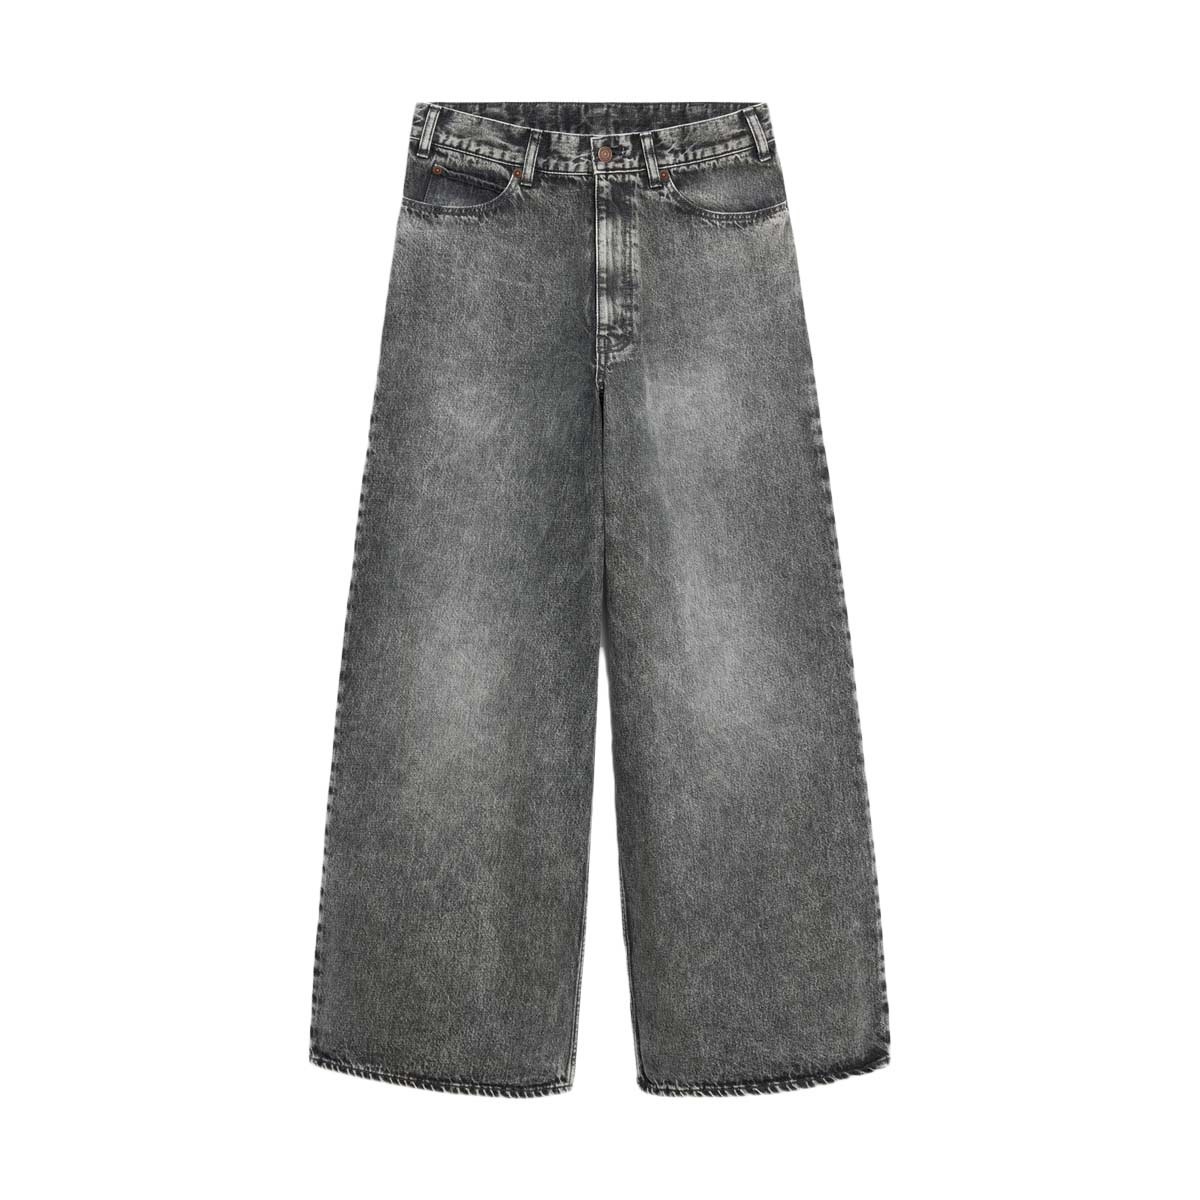 Celine Elephant Jeans Charcoal/Salt and Pepepr Wash